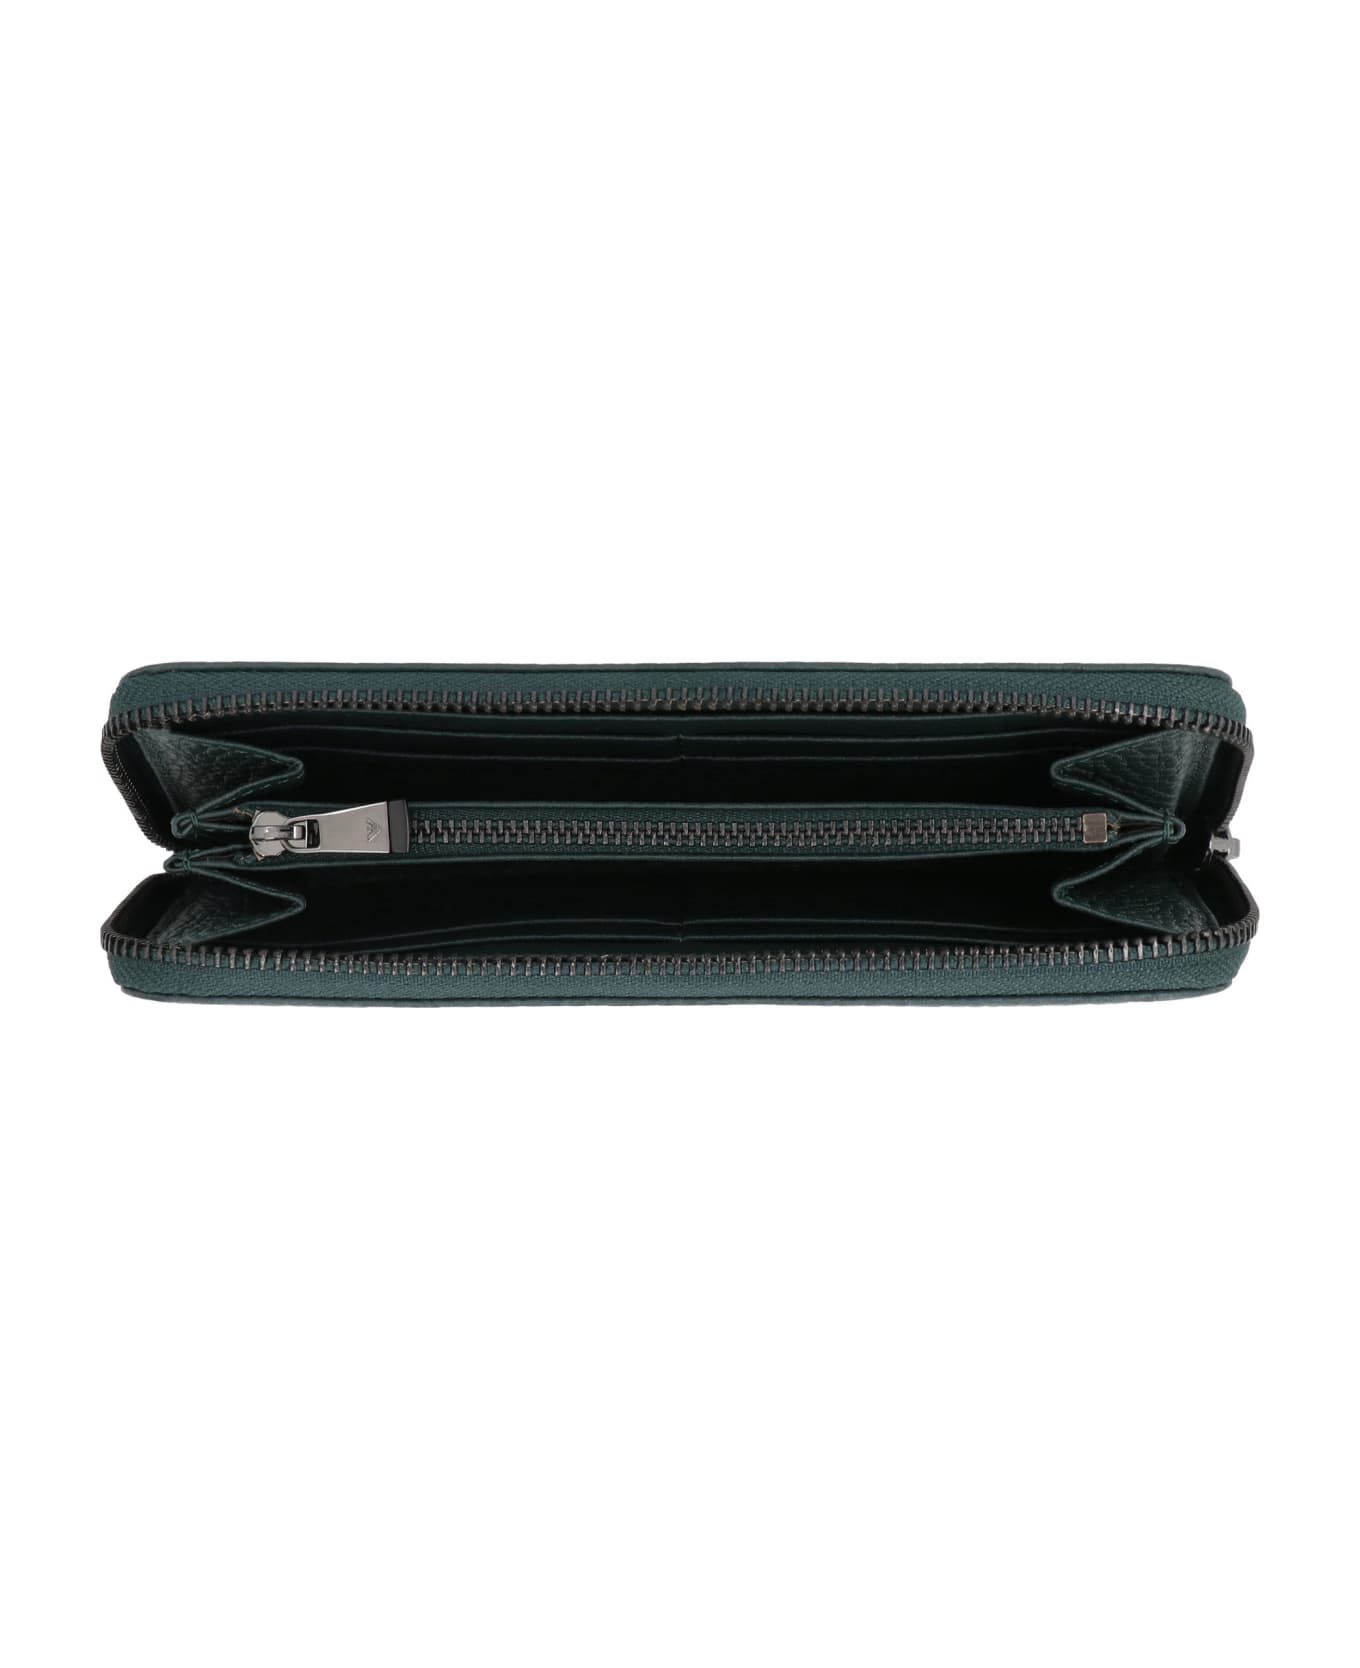 Emporio Armani Leather Zip Around Wallet - green